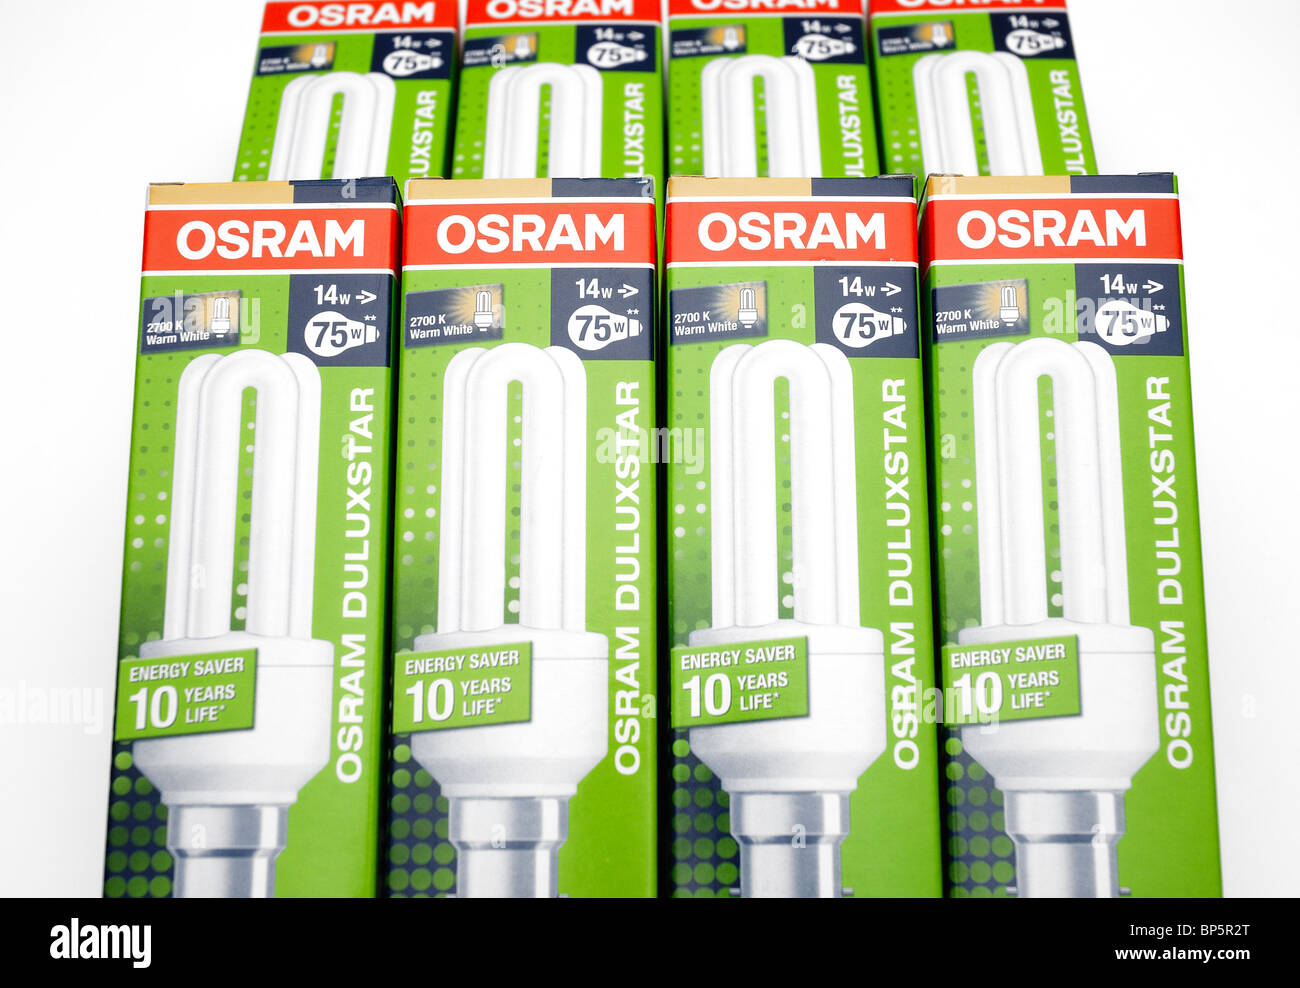 Osram energy bulbs boxed uk packaging Stock Photo - Alamy